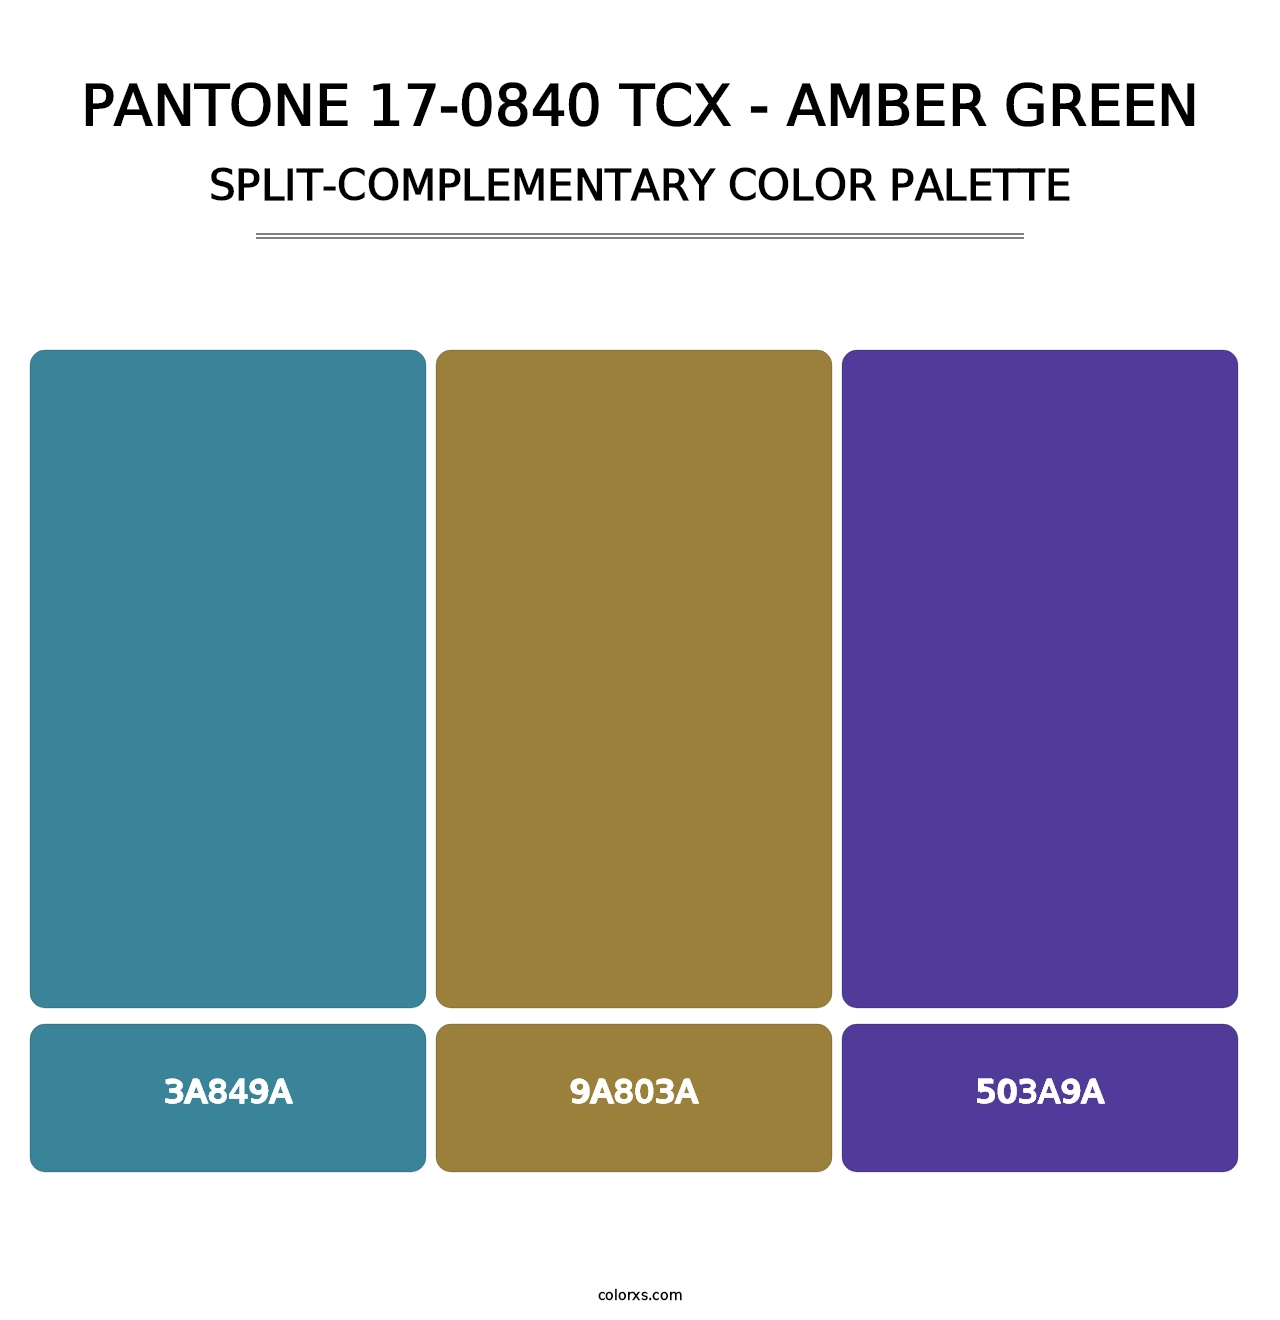 PANTONE 17-0840 TCX - Amber Green - Split-Complementary Color Palette